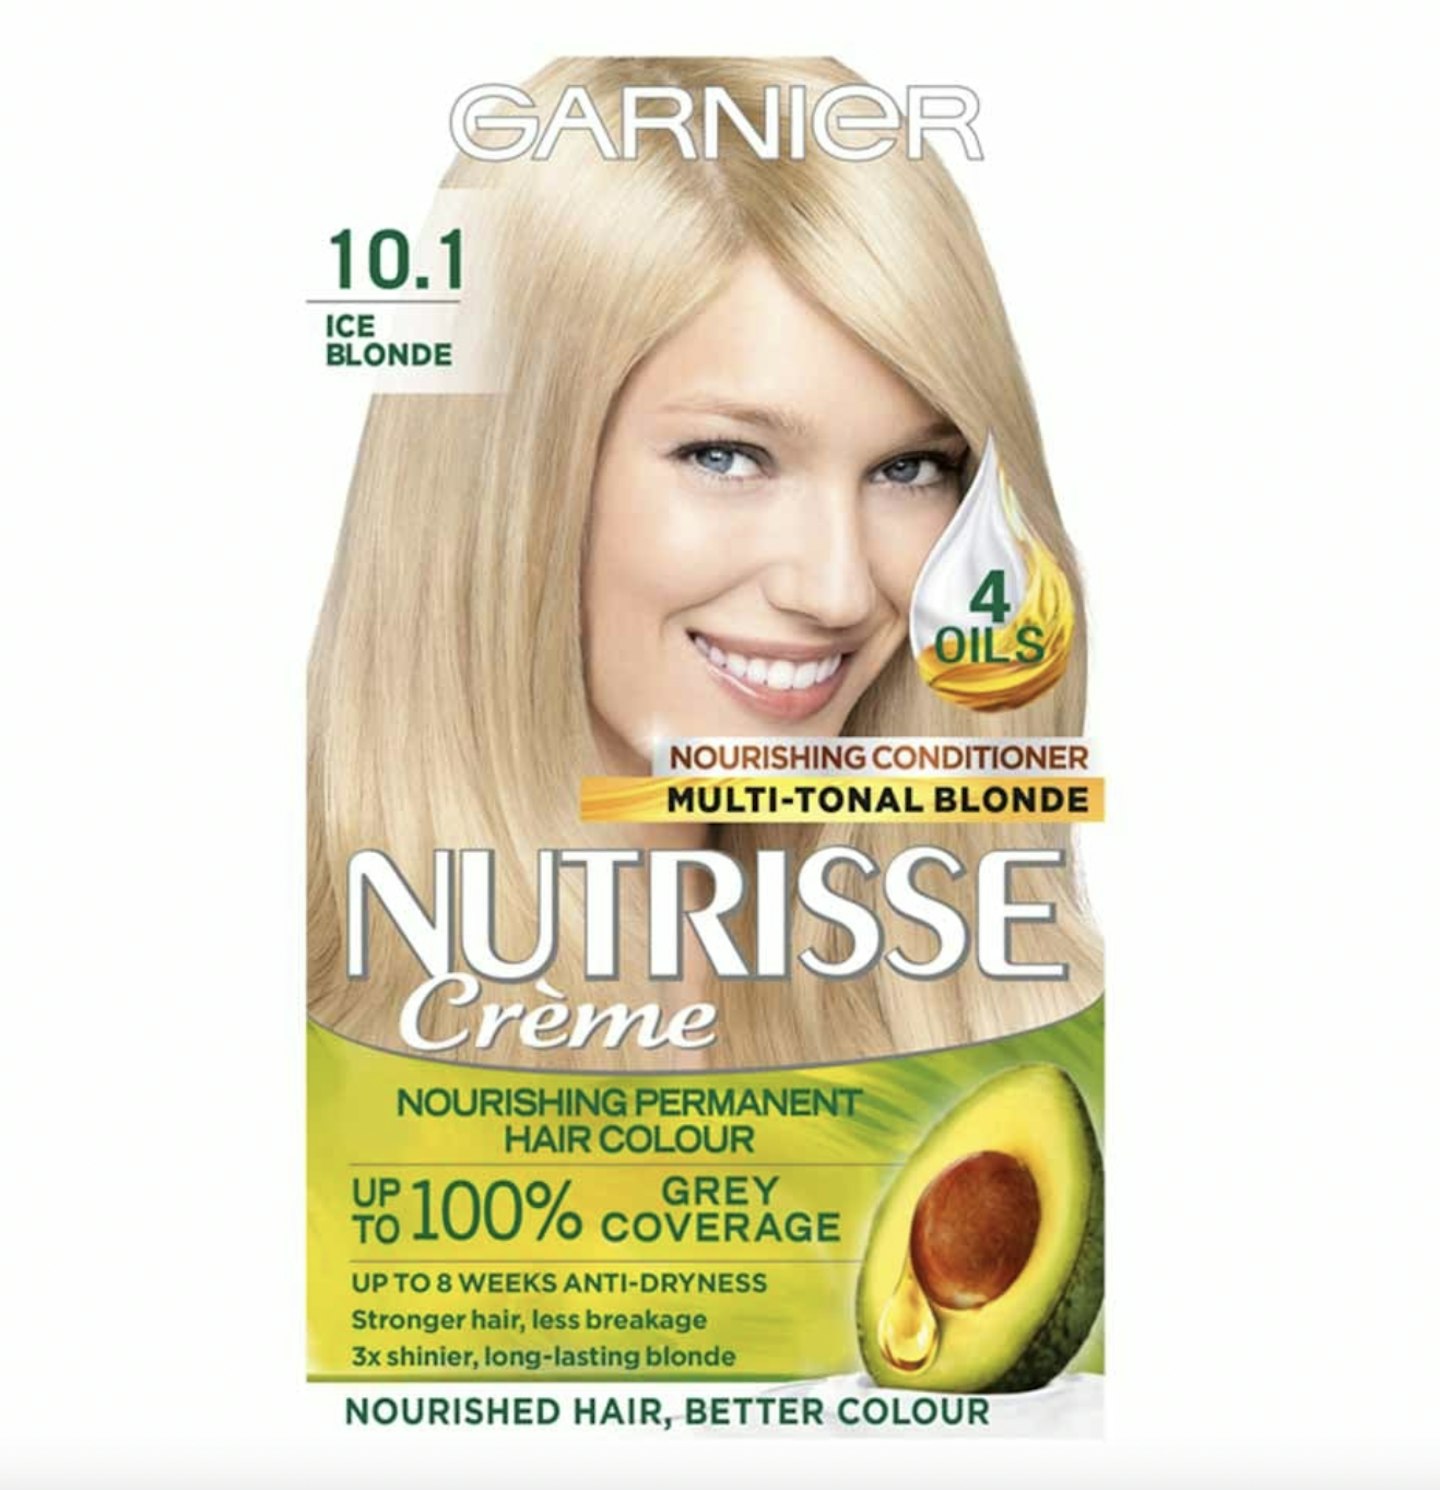 Garnier Nutrisse's 10.1 Ice Blonde Permanent Hair Dye